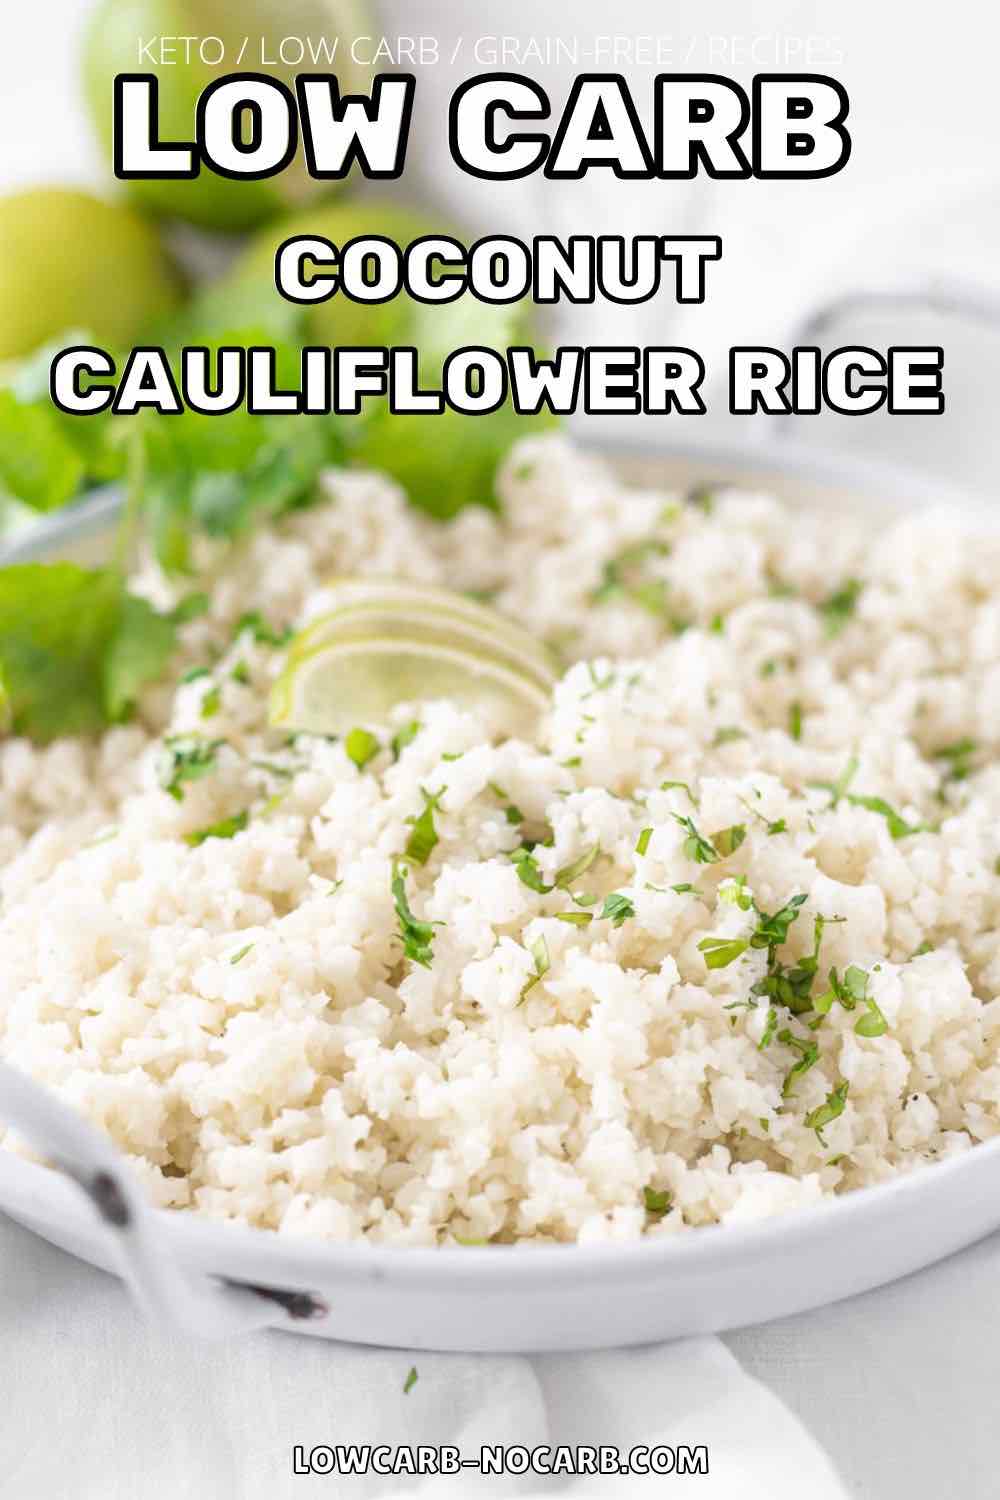 Coconut Cauliflower Rice in a flat bowl.